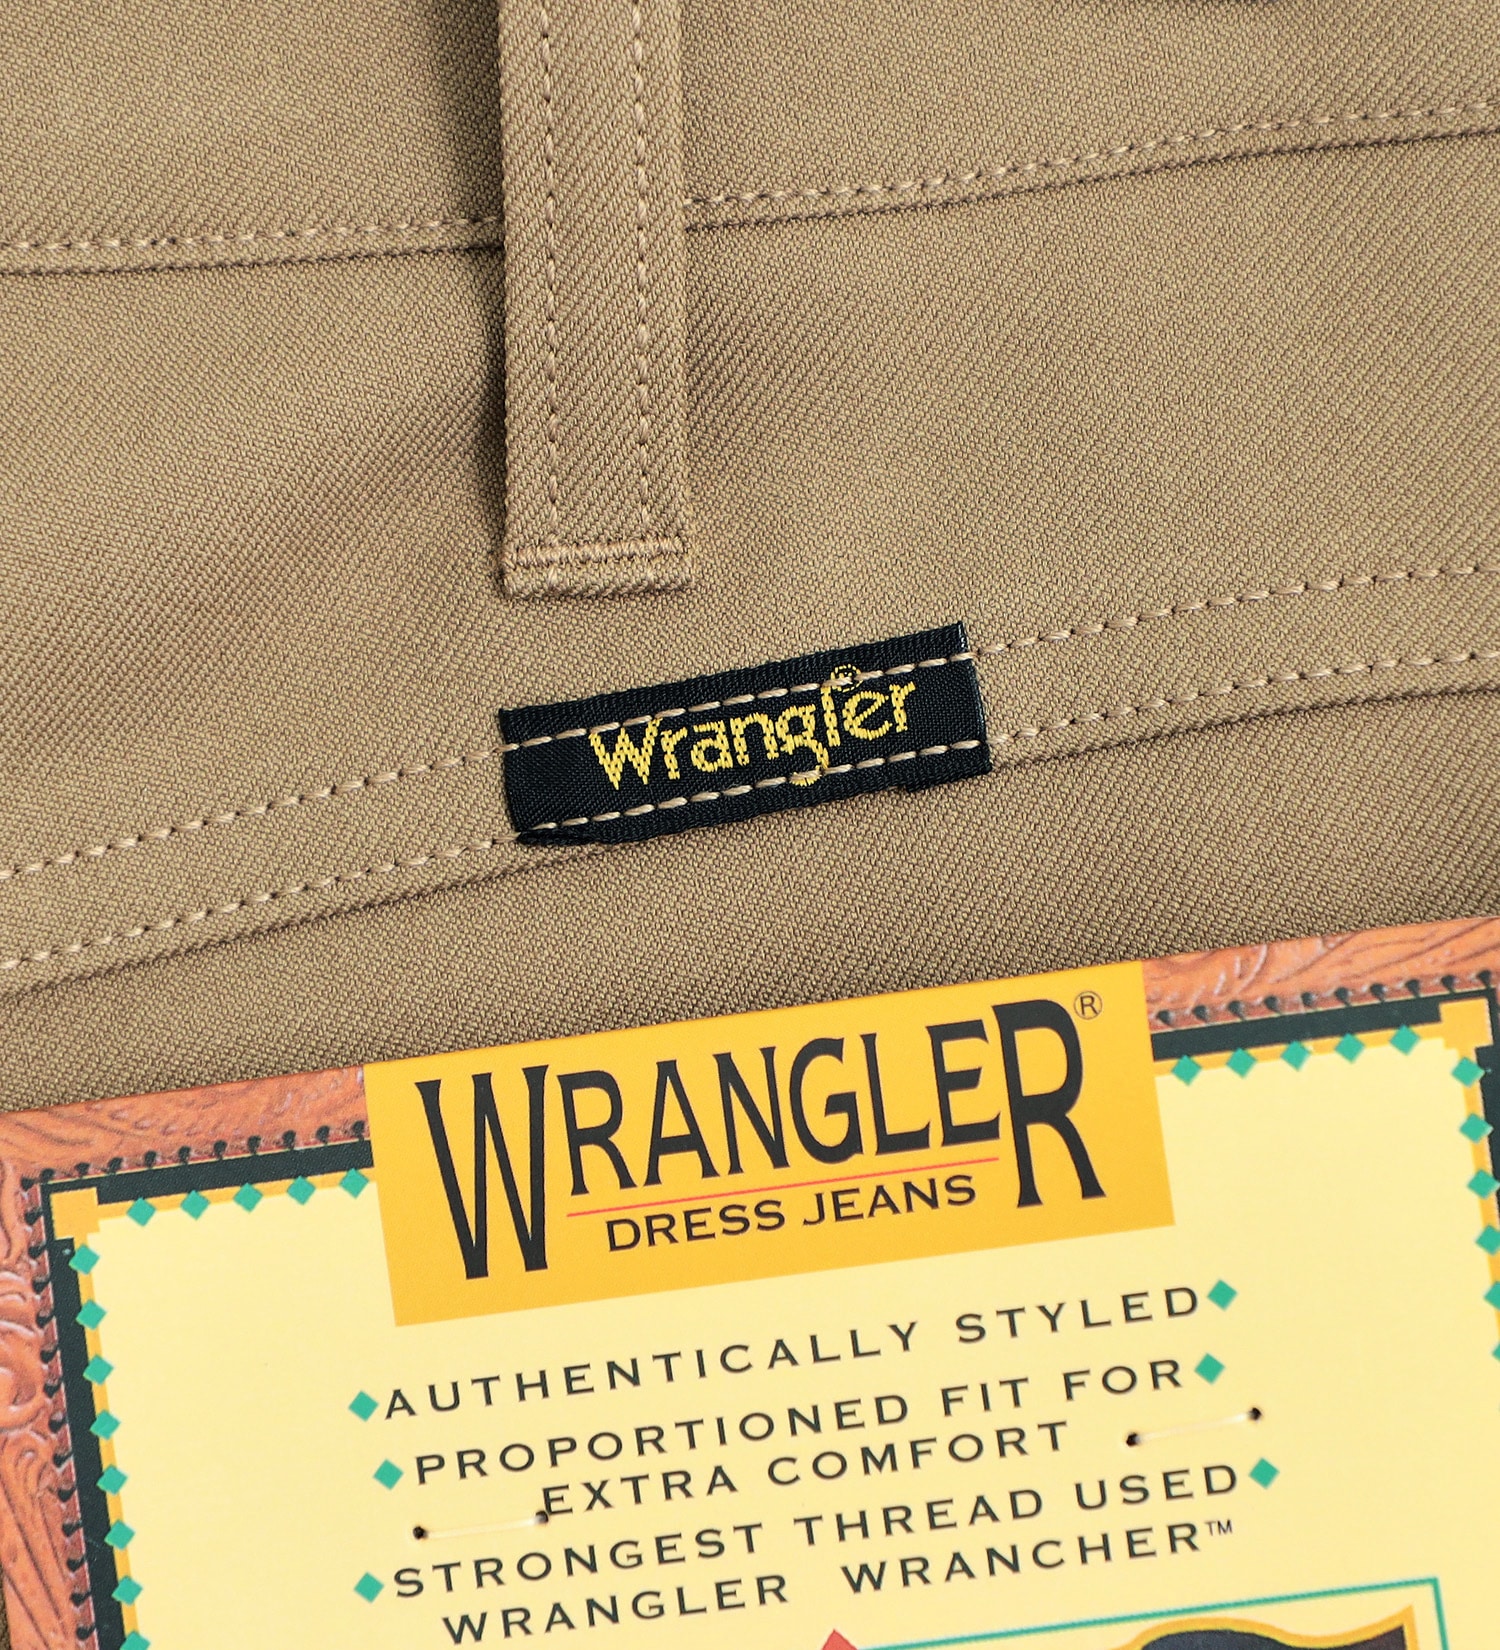 Wrangler(ラングラー)のWRANGLER WRANCHER/ランチャー フレアードレスパンツ(レディース)|パンツ/パンツ/レディース|ベージュ